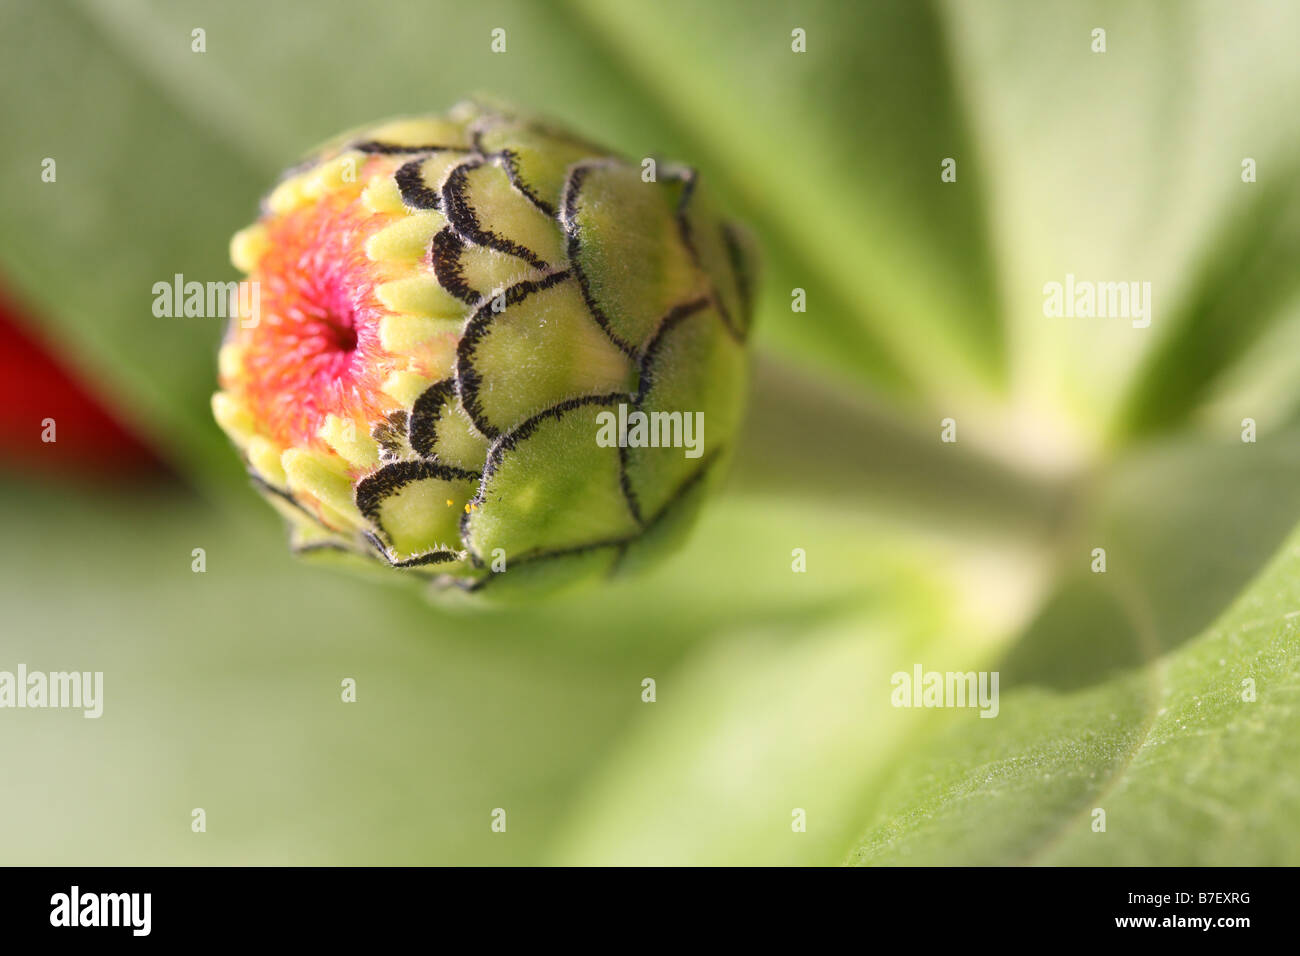 stock photo of a macro flower image Stock Photo